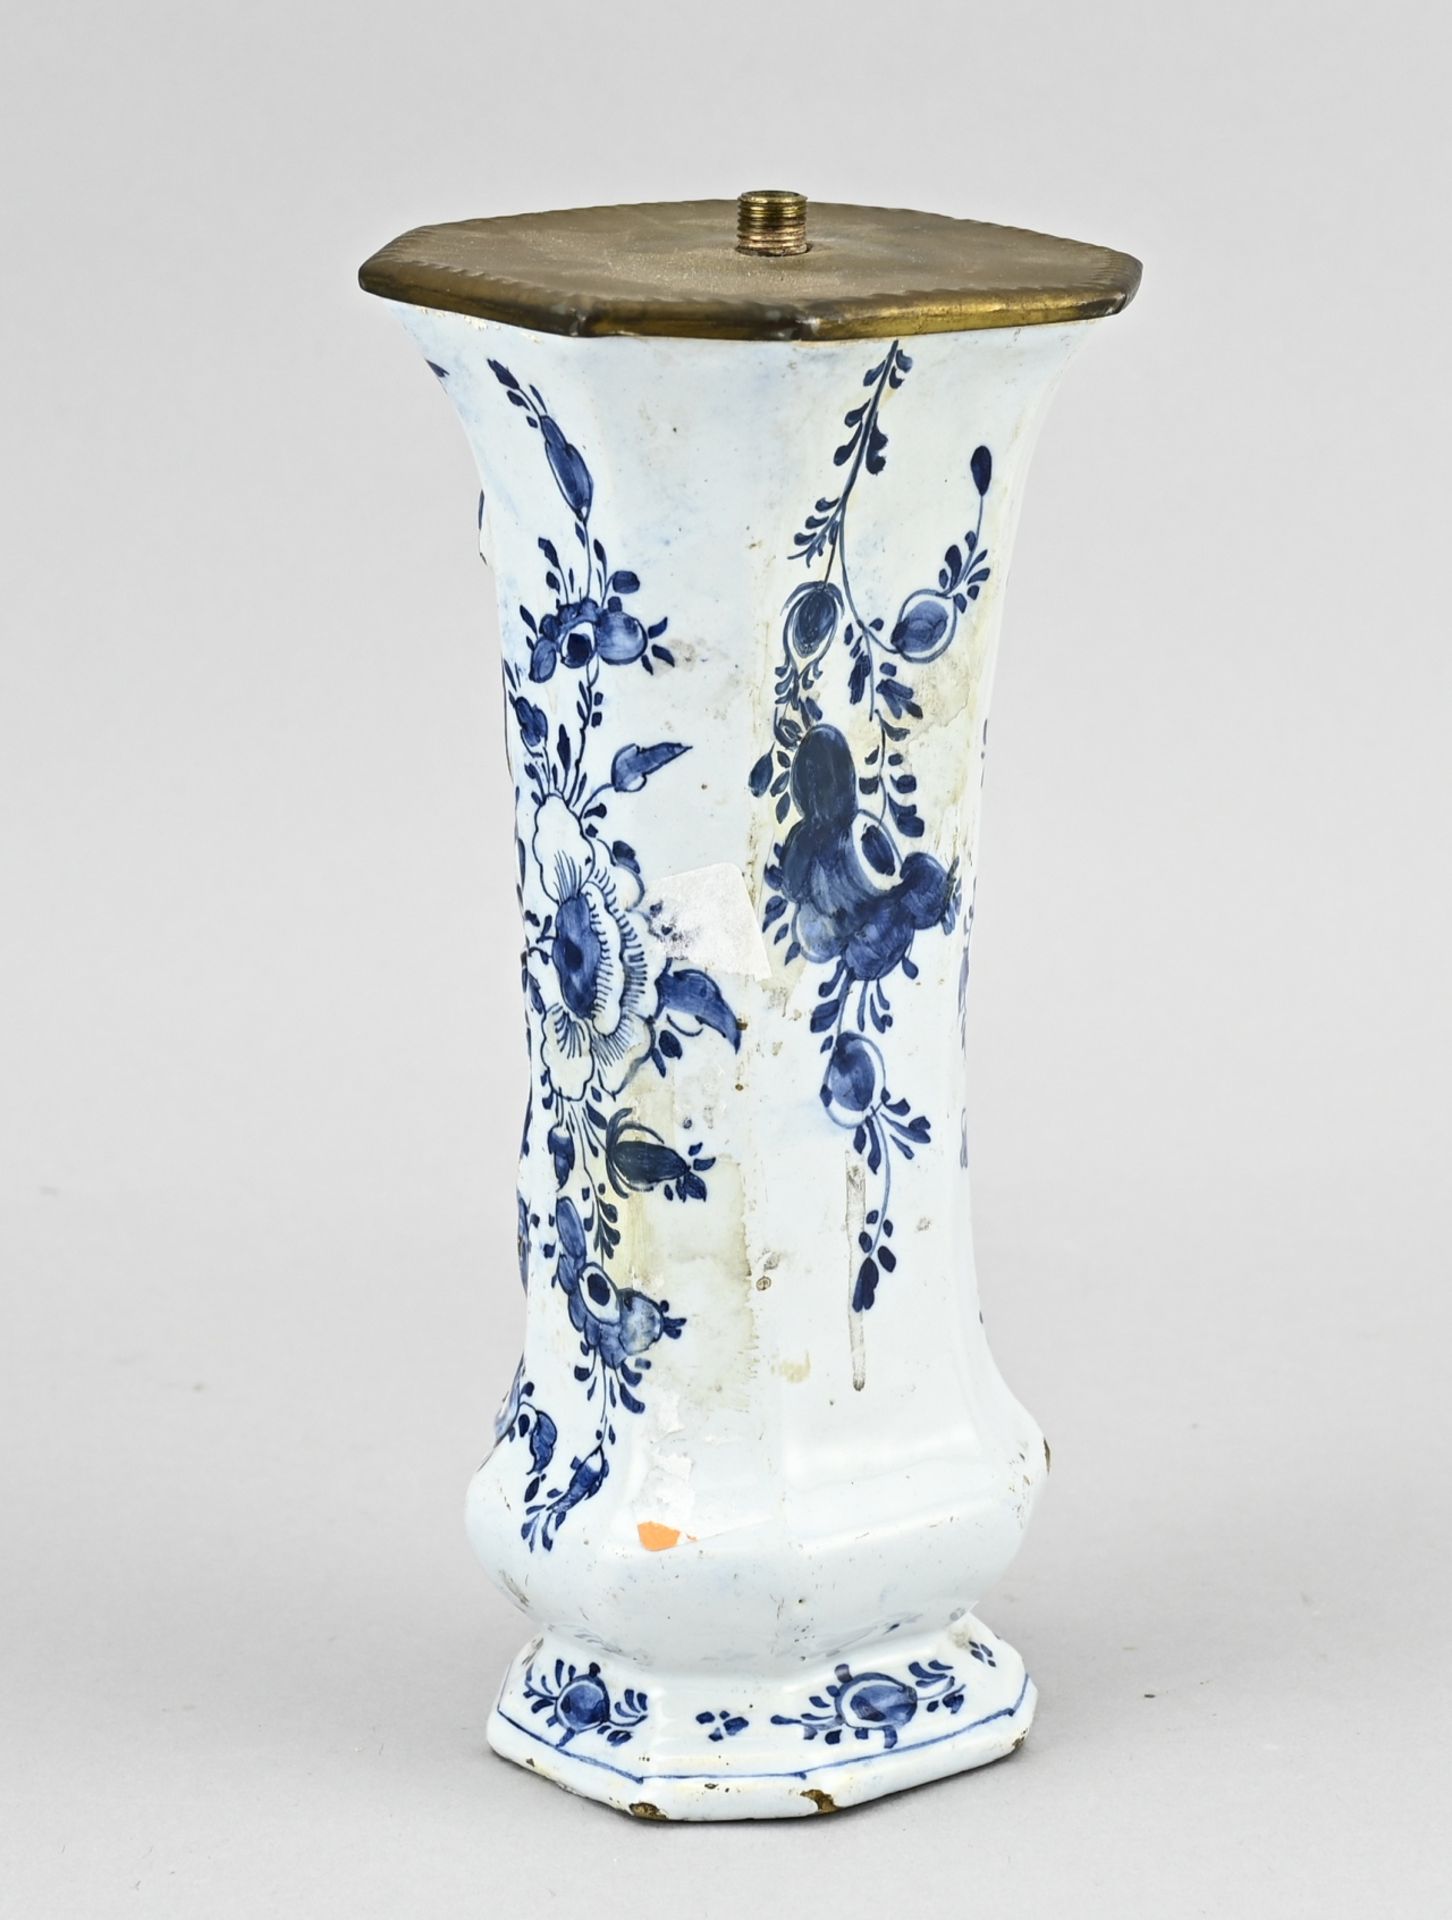 Delft vase, H 21 cm. - Image 2 of 3